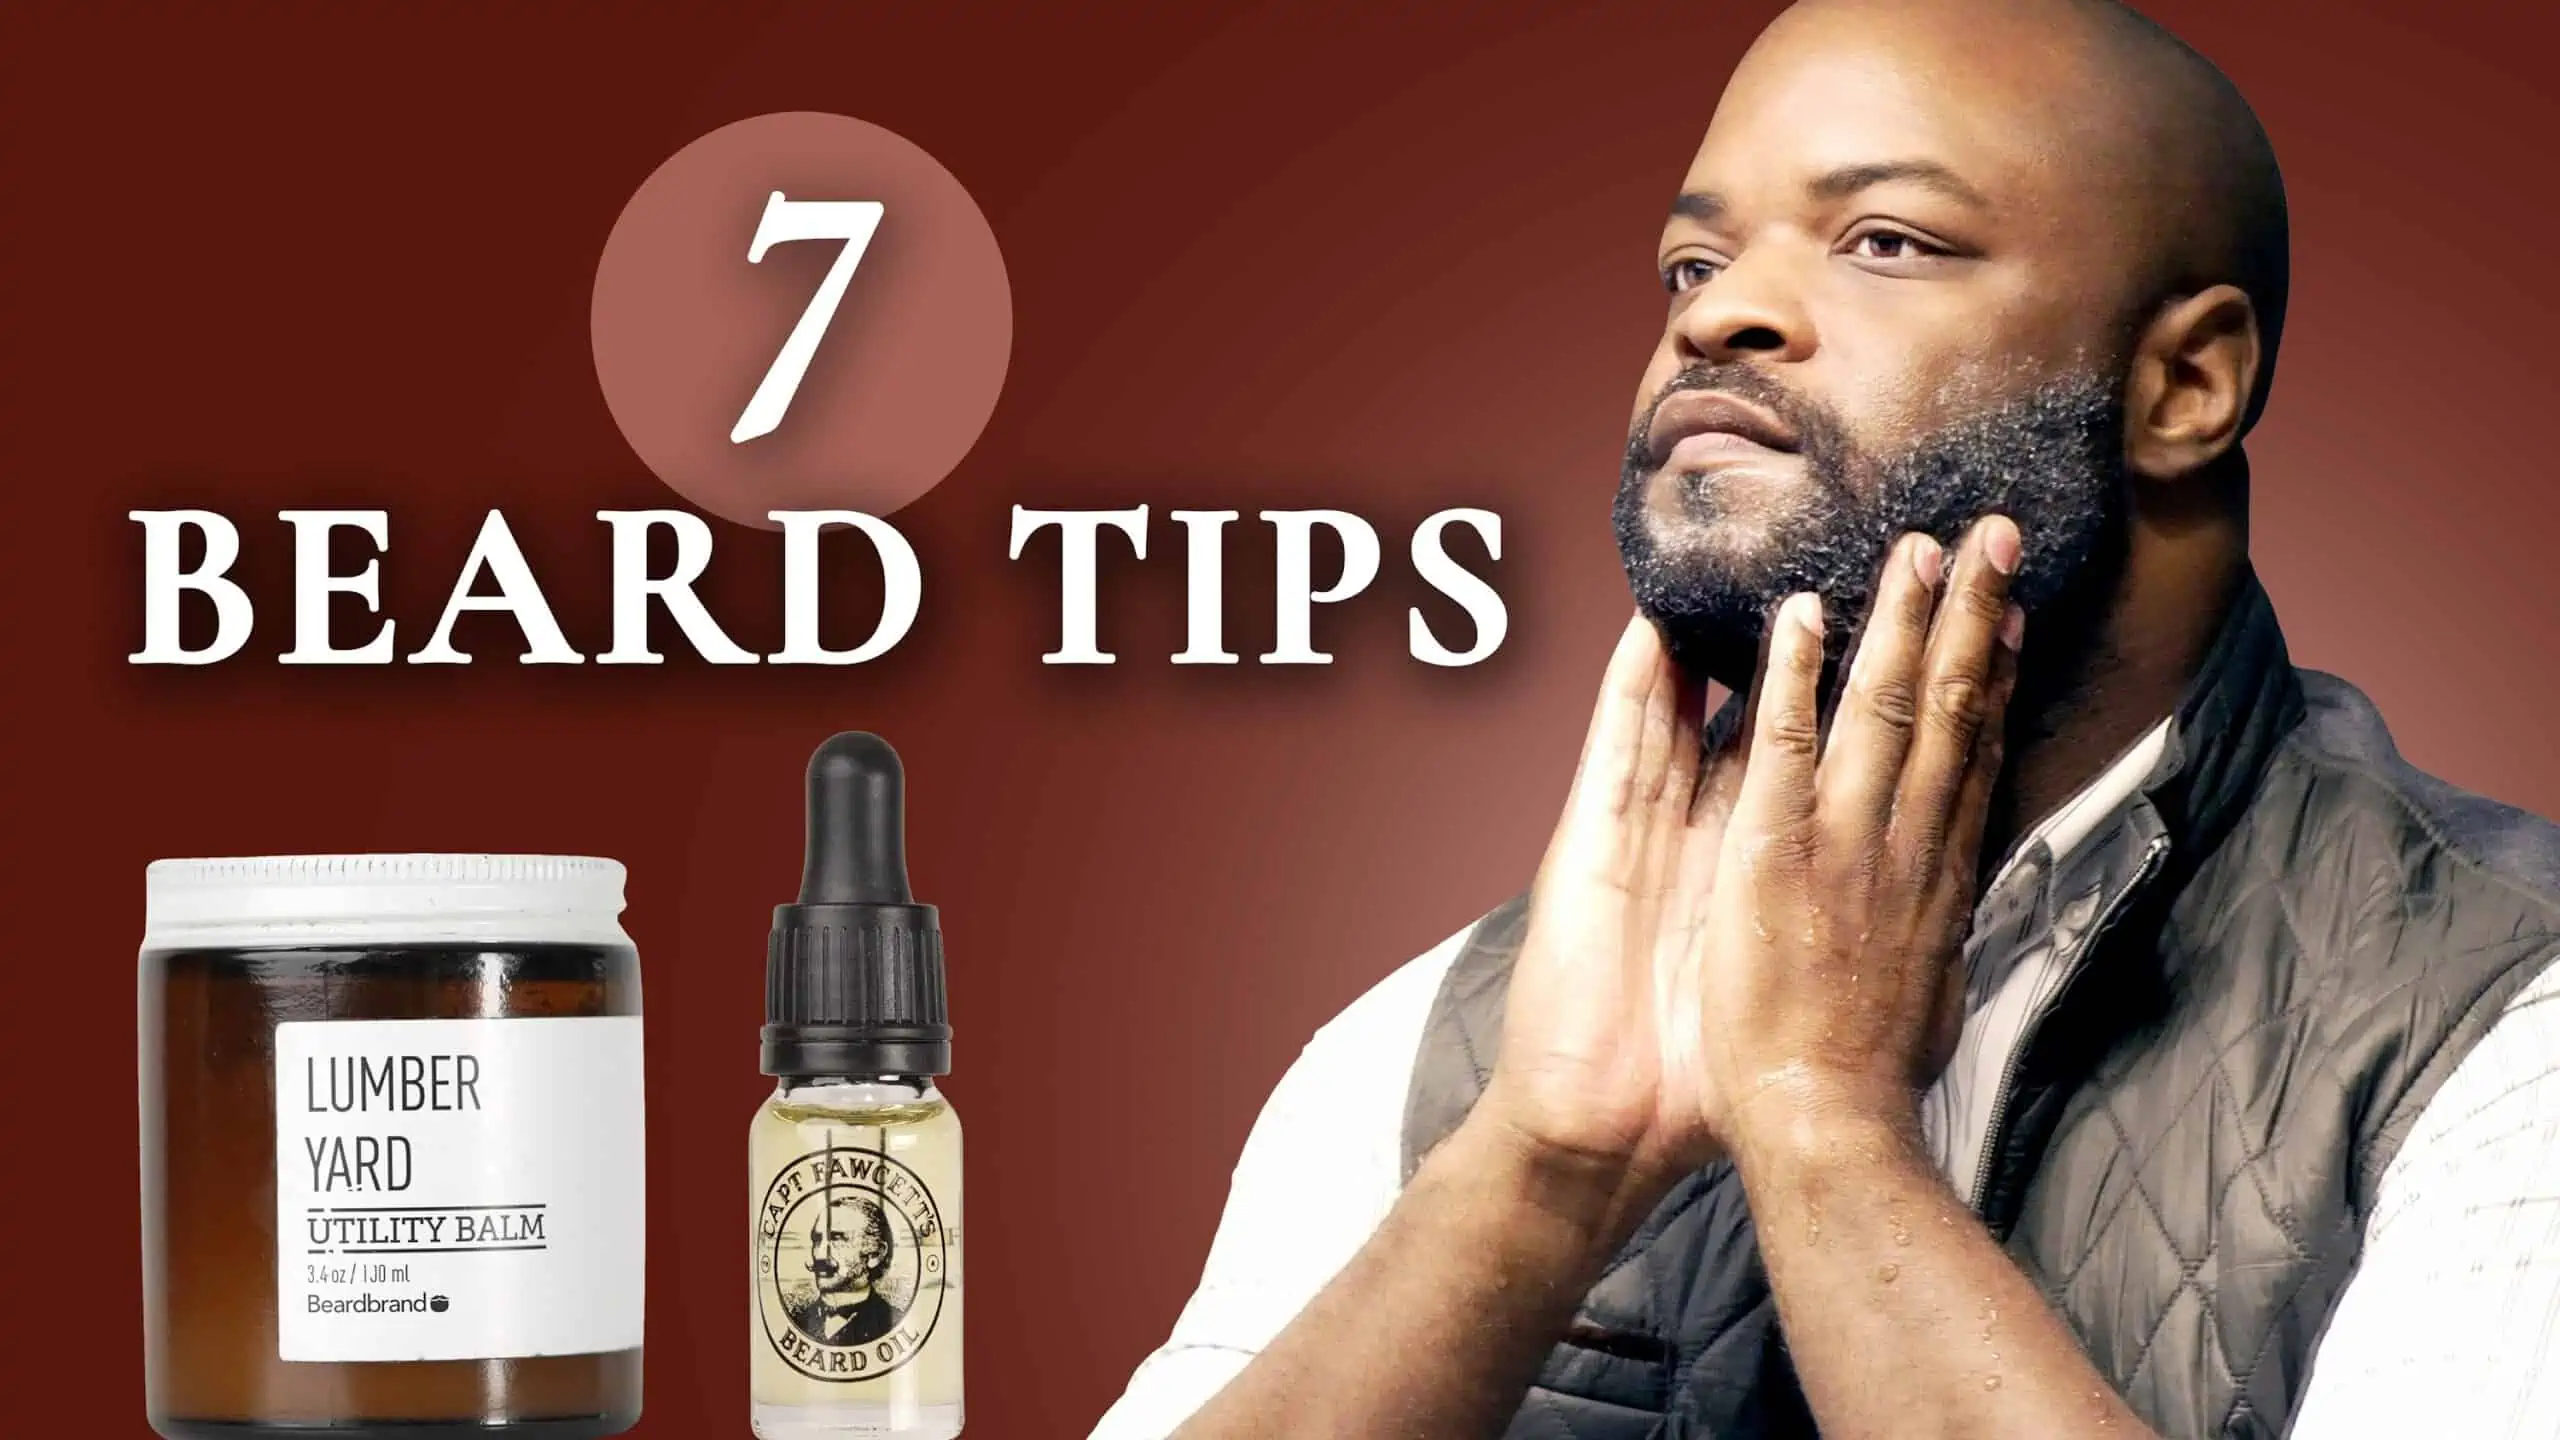 7 beard tips 3840x2160 scaled